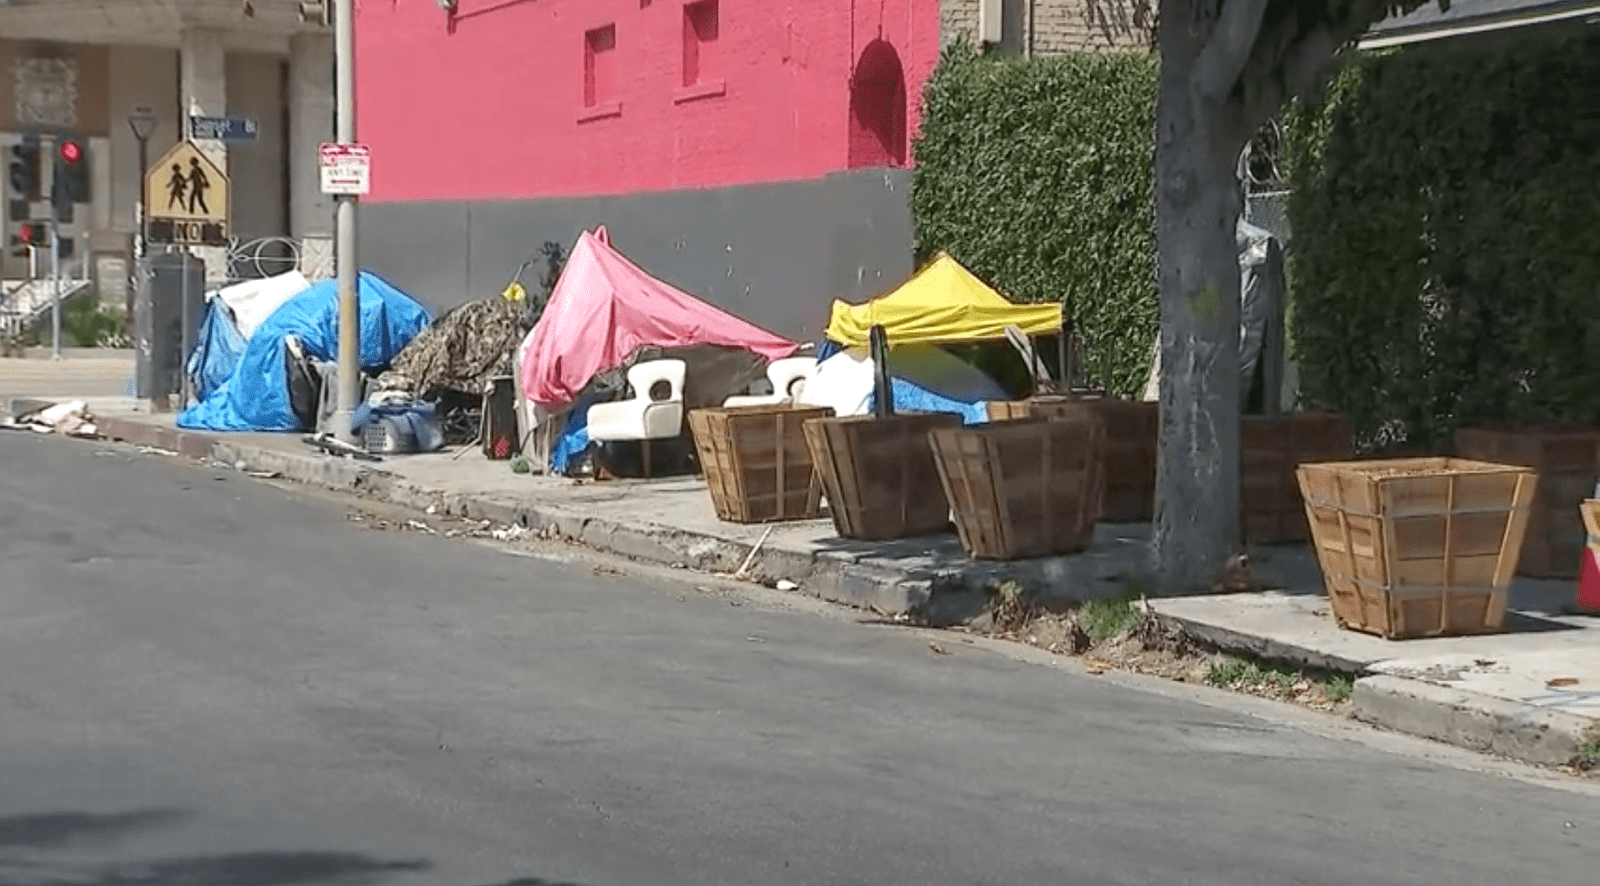 Hollywood businesses install plants on sidewalk to deter homeless encampments